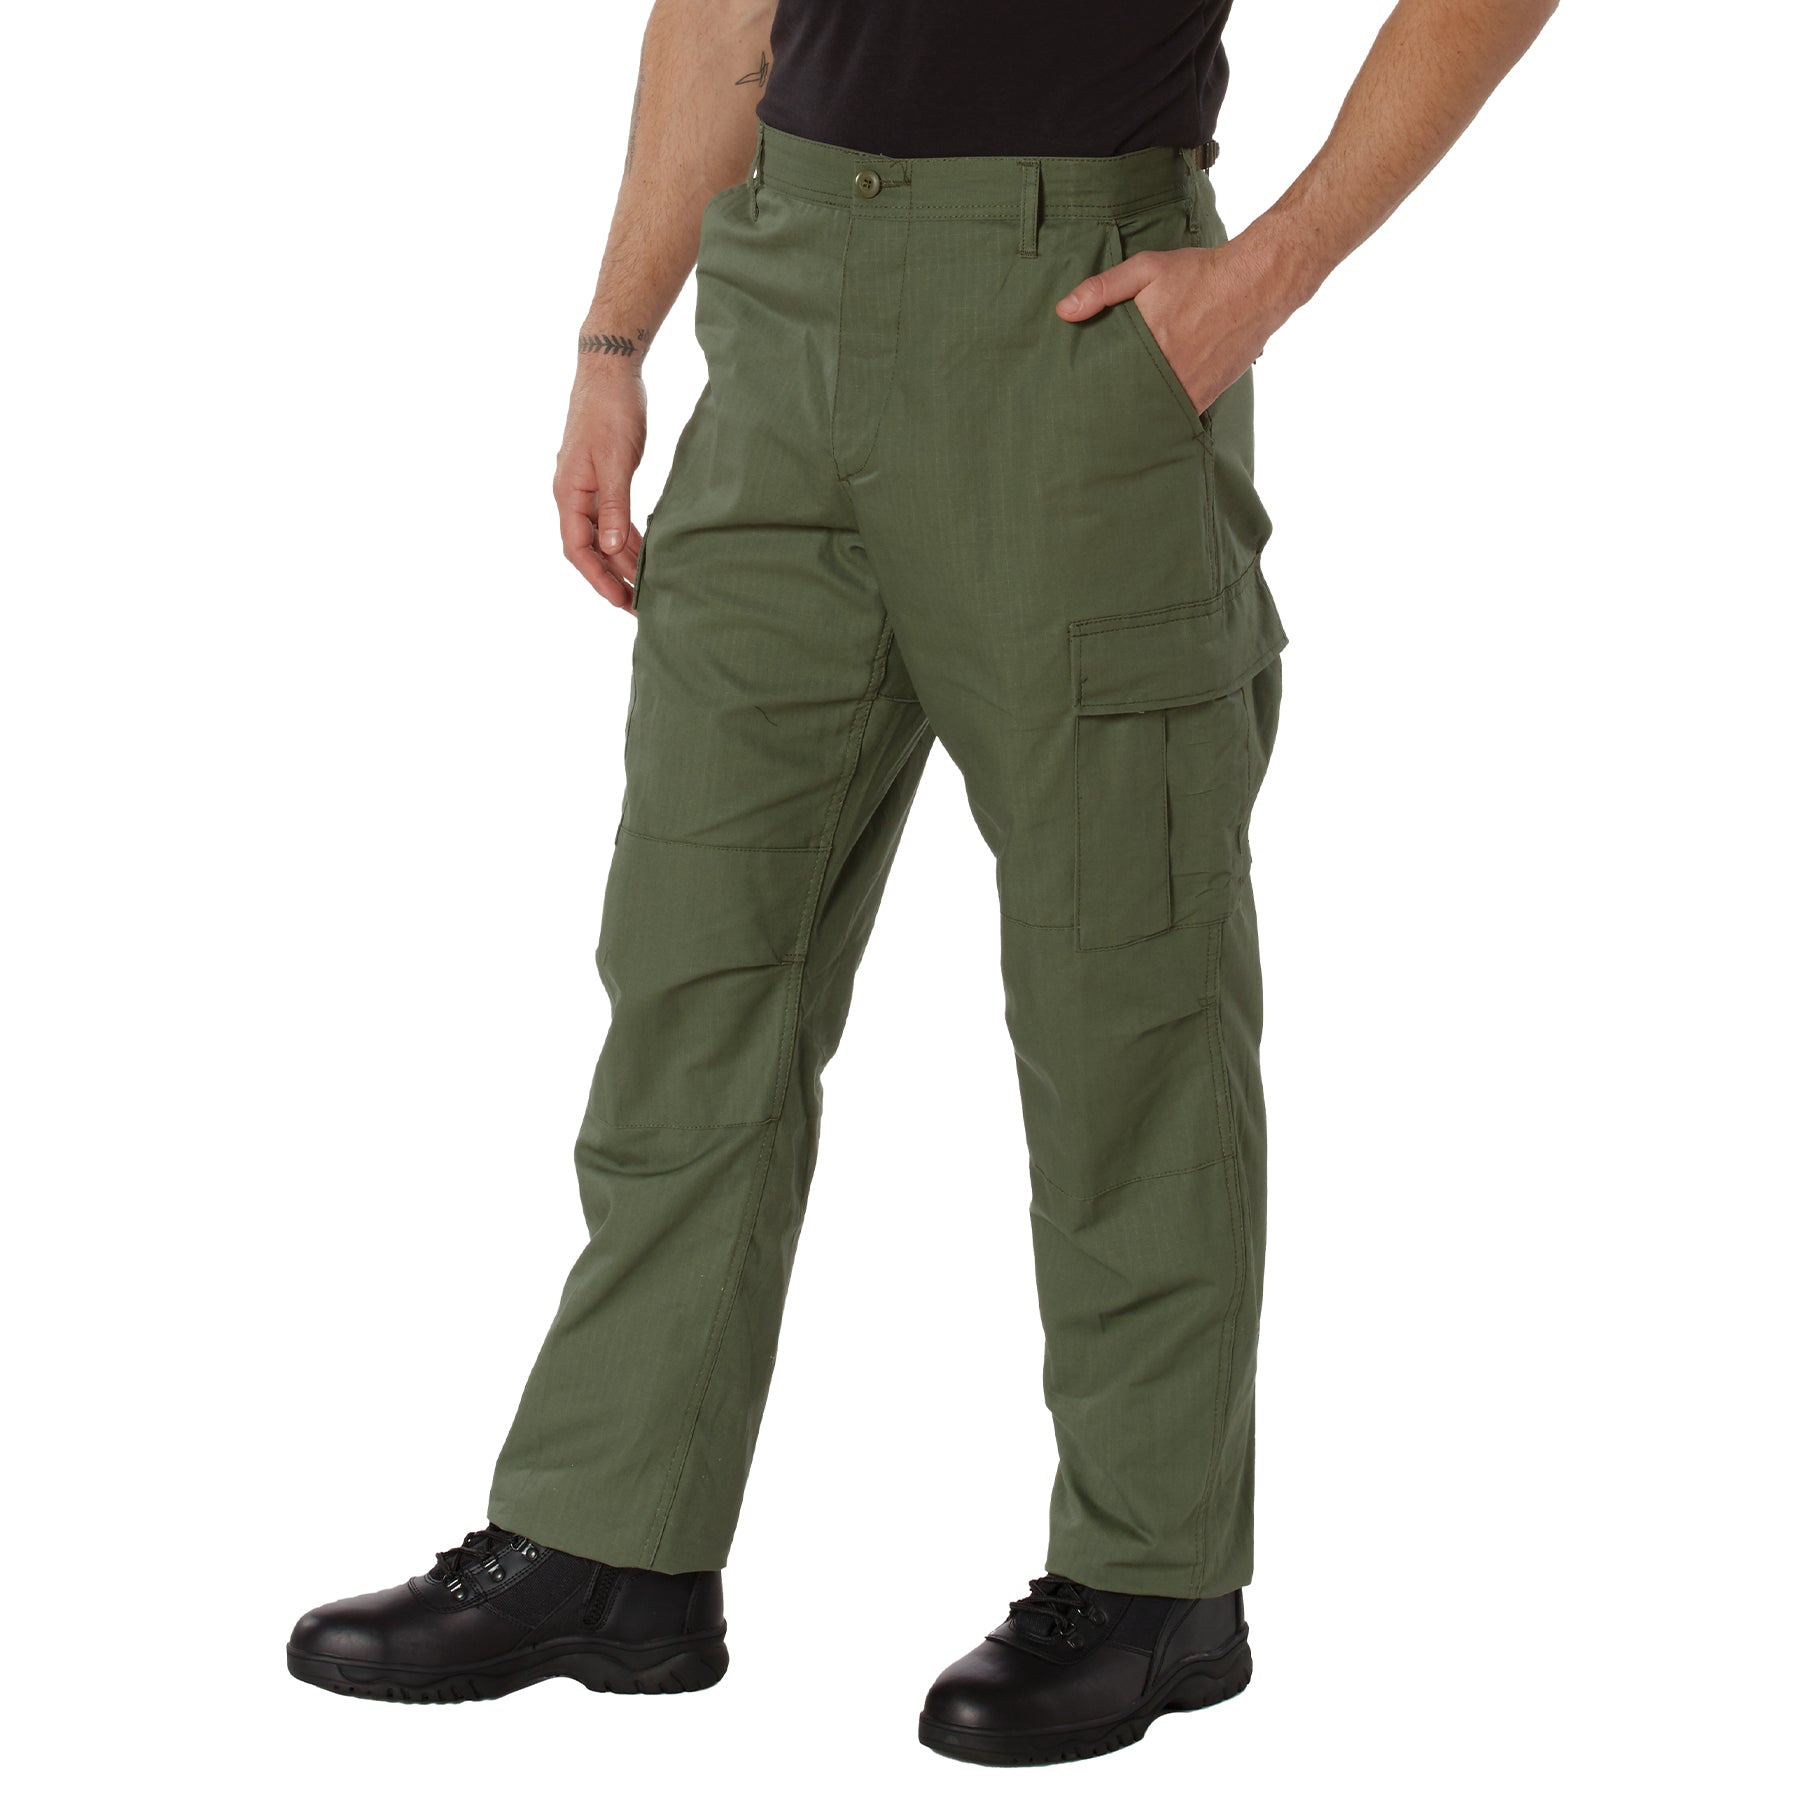 Cotton Rip-Stop Tactical BDU Pants